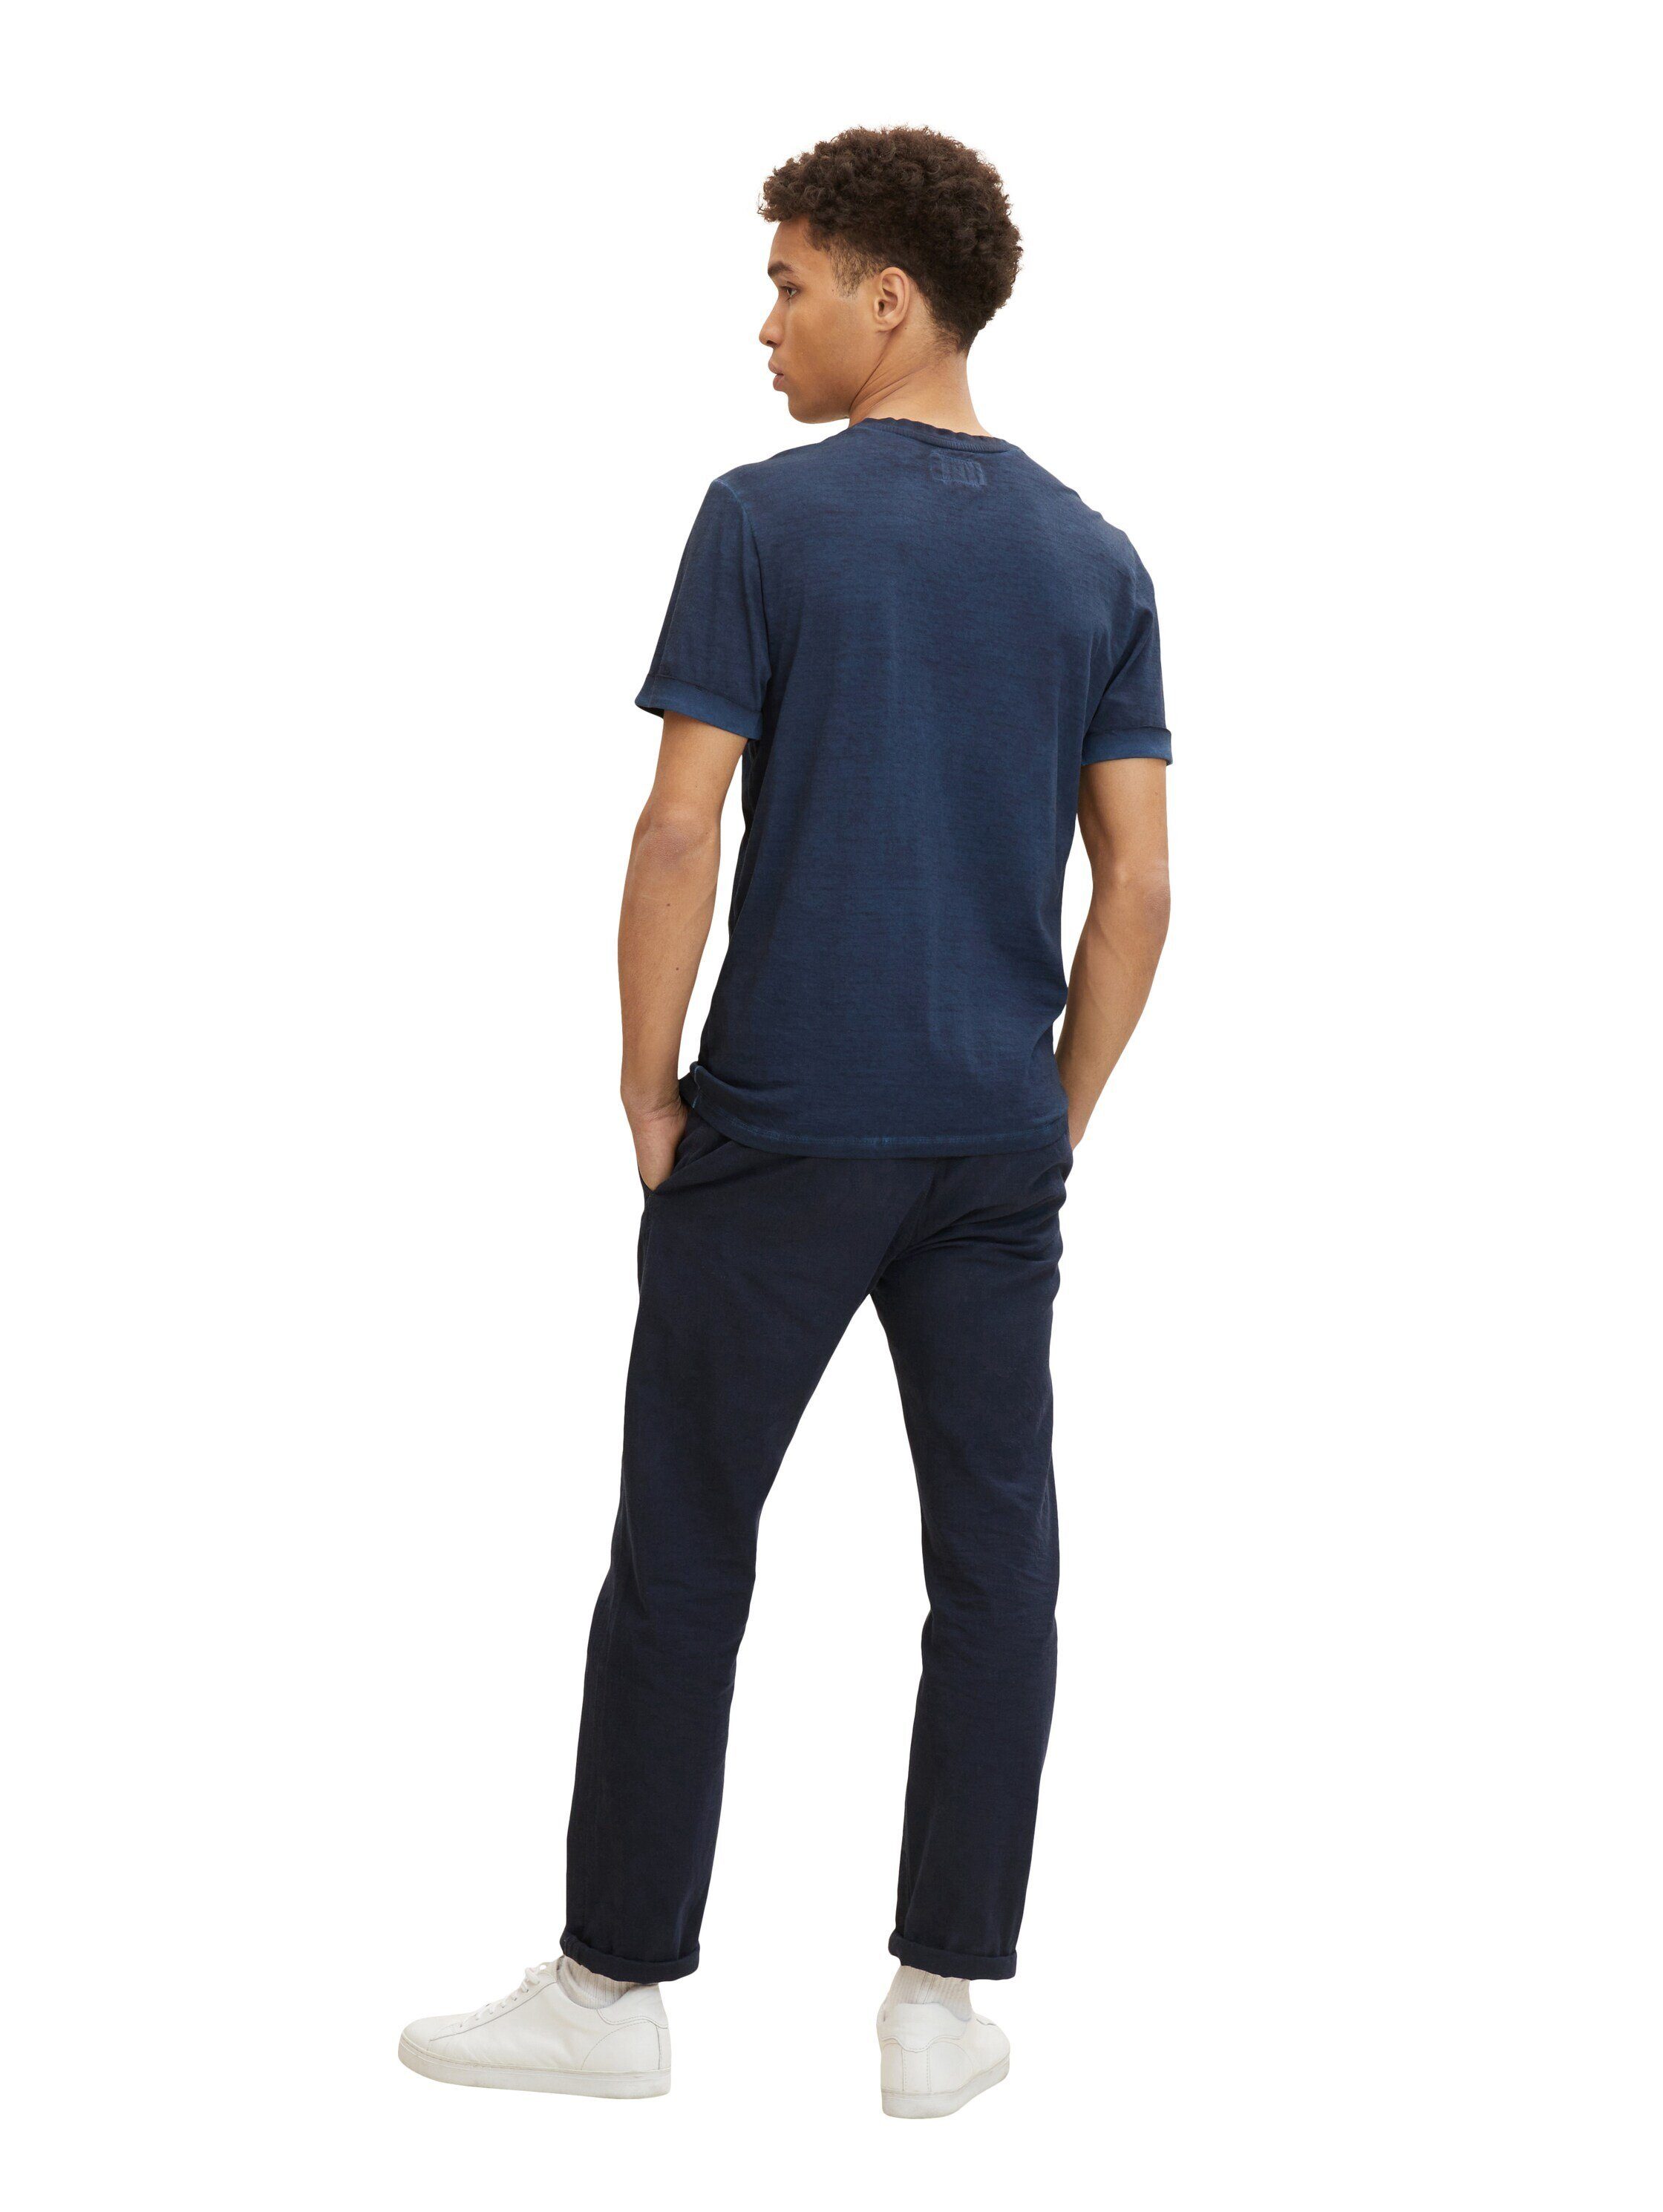 mit Logo Shirt TAILOR blau TOM T-Shirt V-Ausschnitt Print und T-Shirt